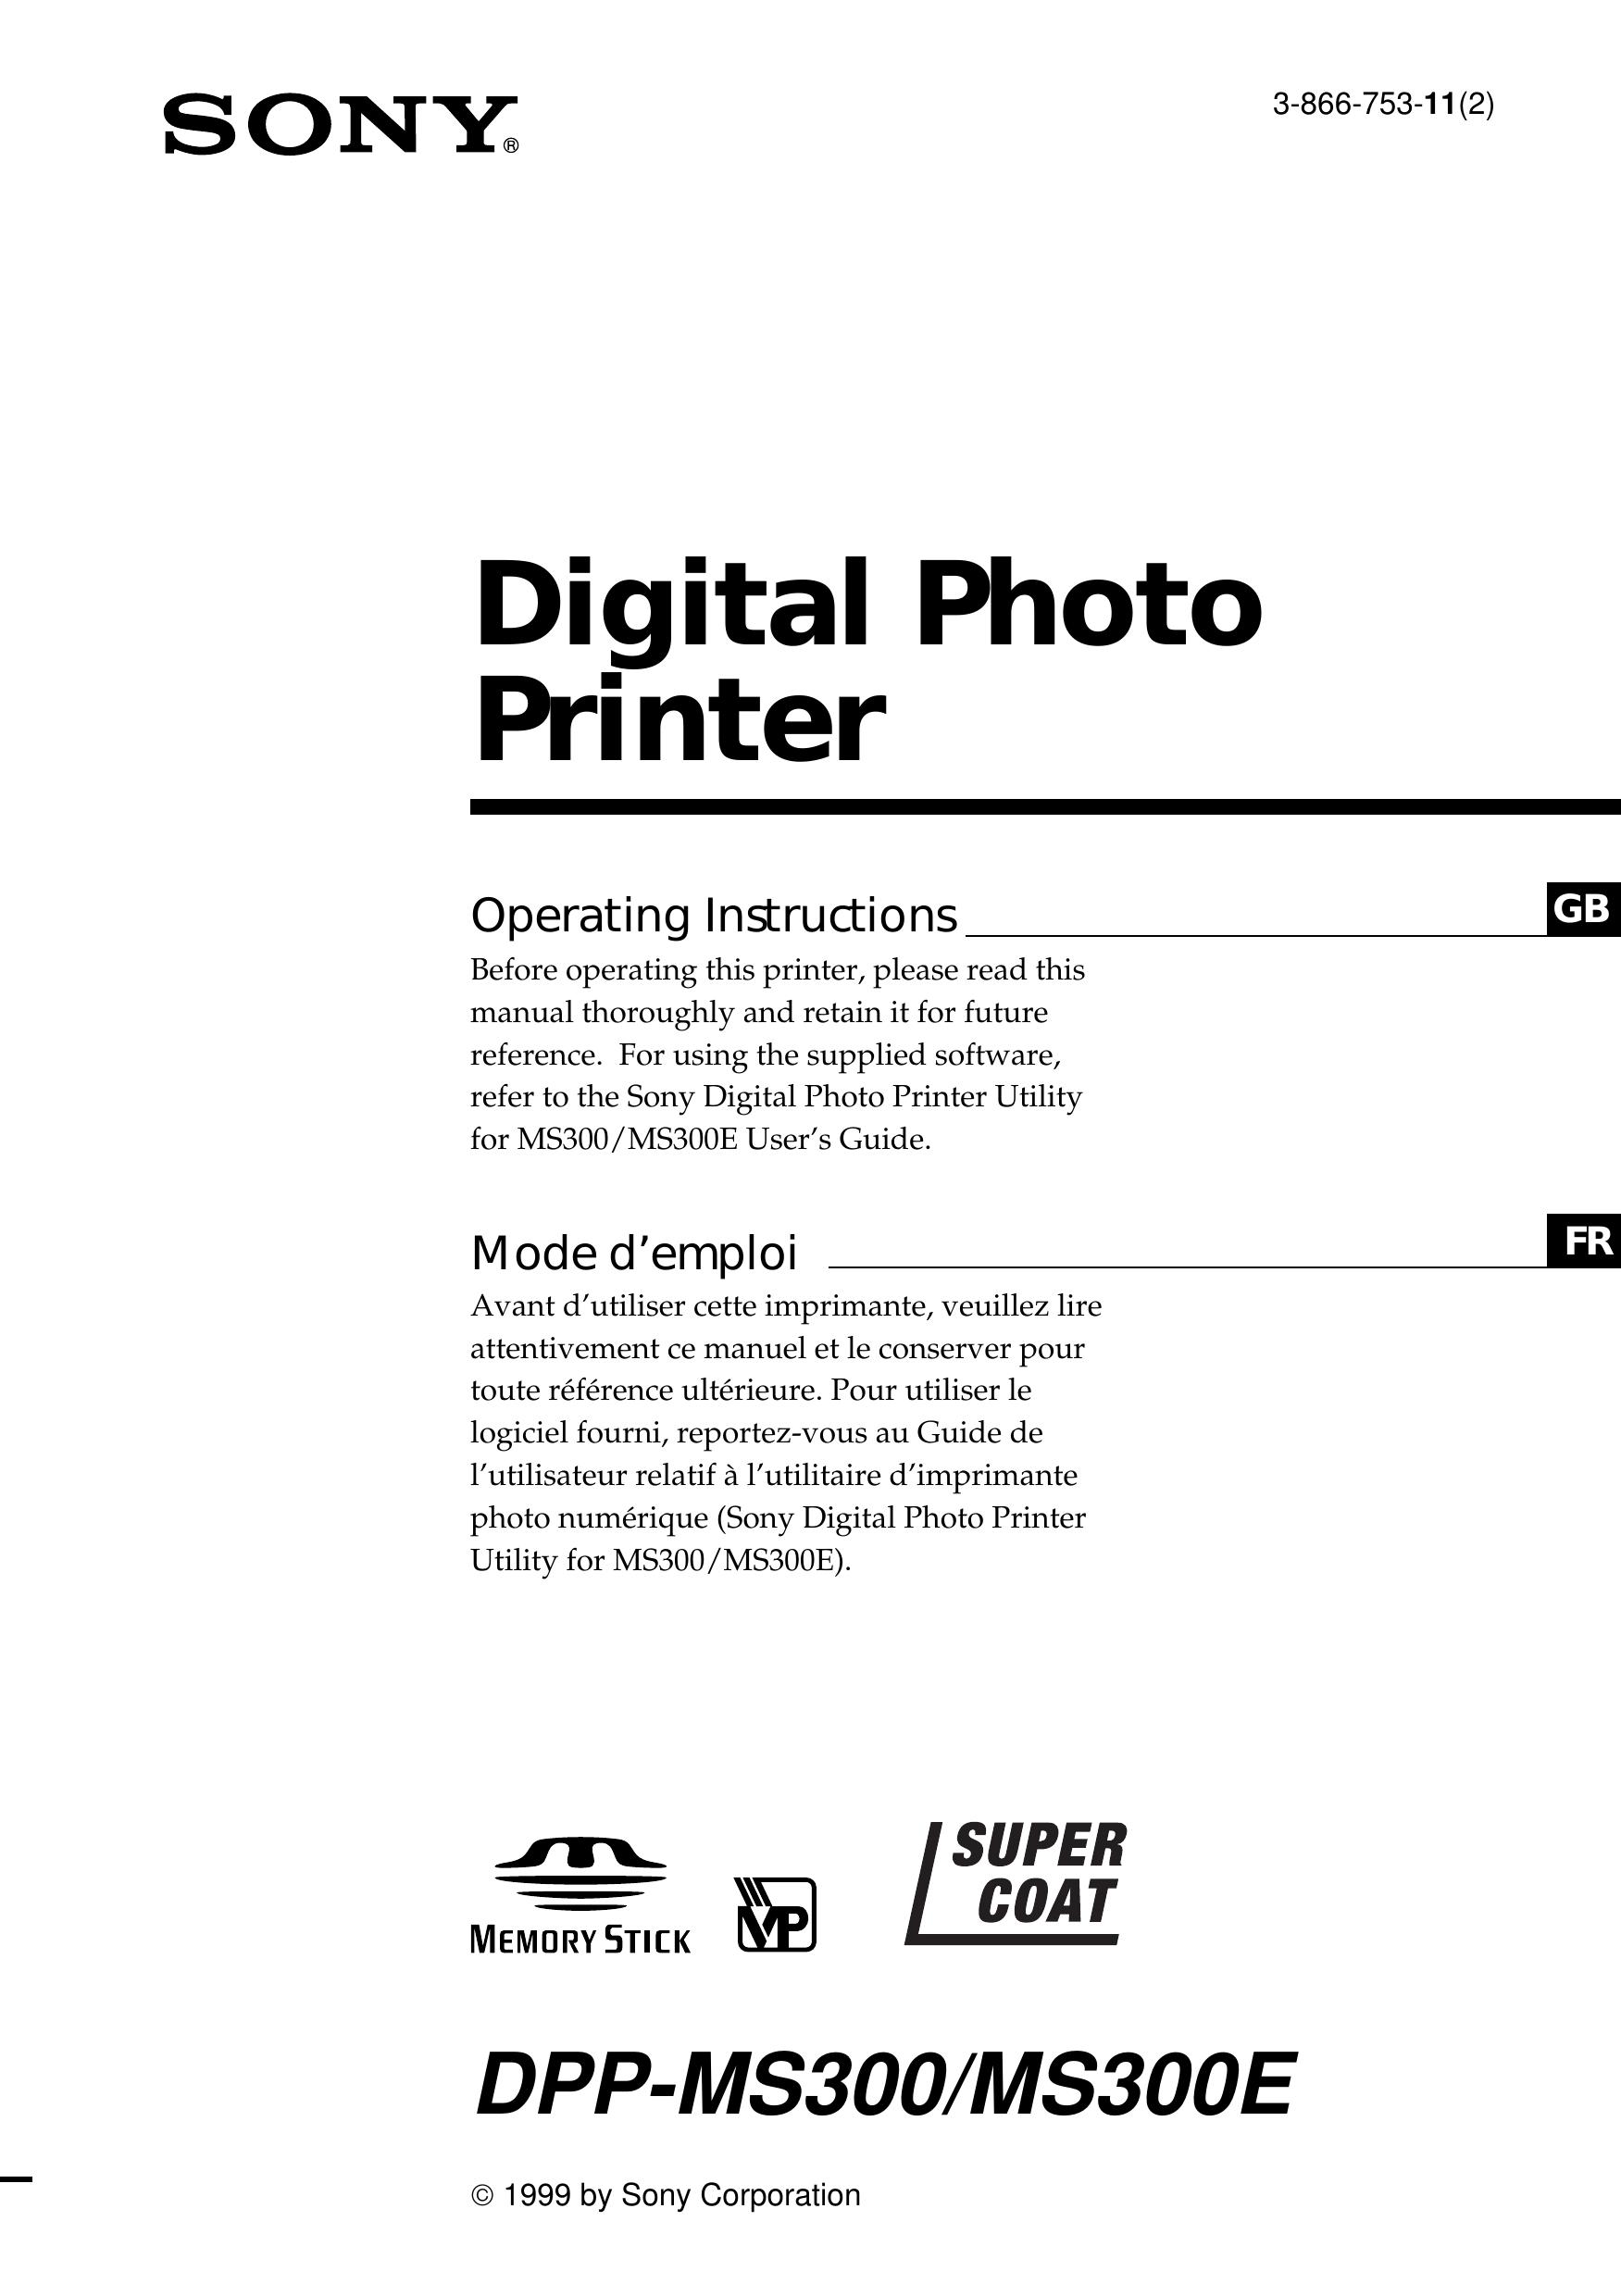 Sony DPP-MS300E Photo Printer User Manual